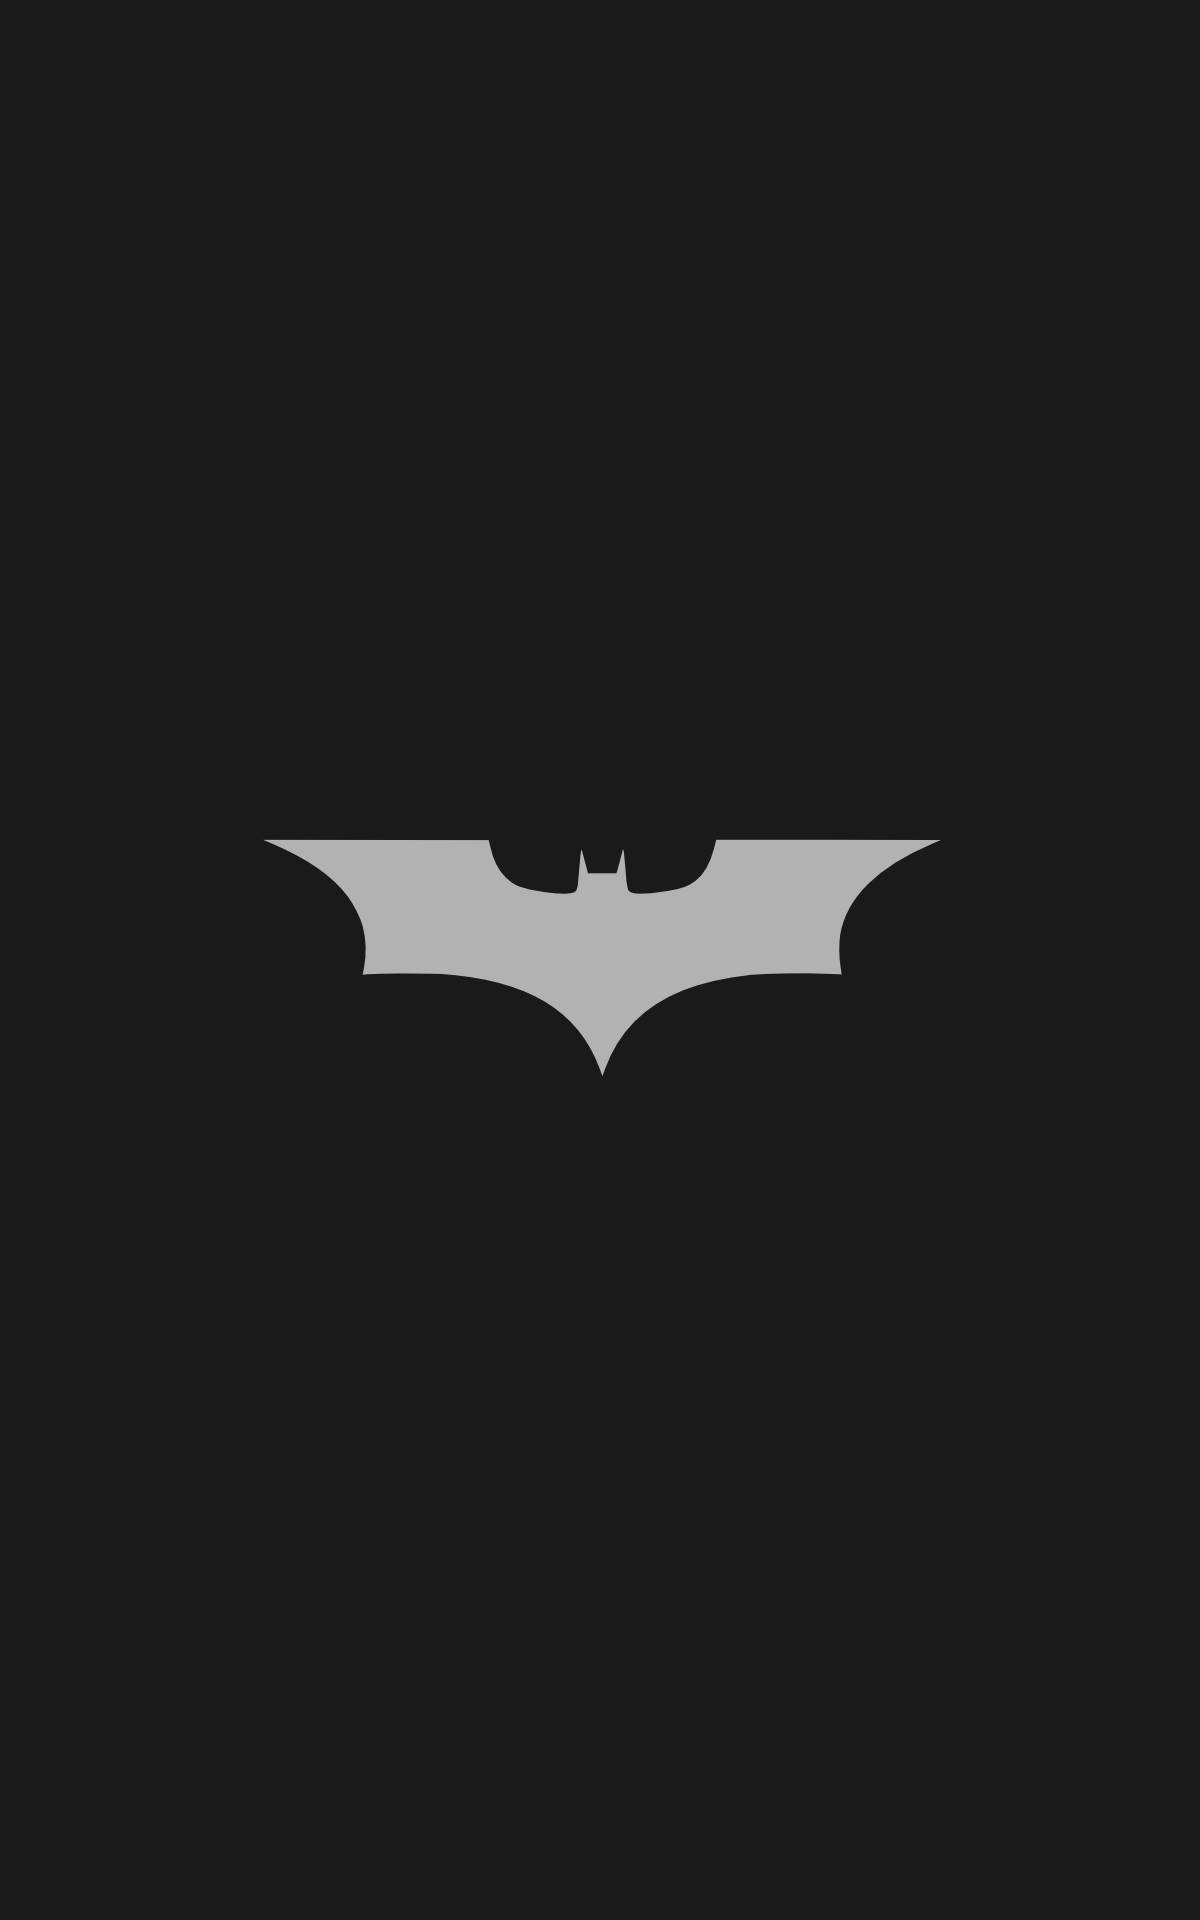 General 1200x1920 Batman logo Batman minimalism portrait display black background simple background superhero